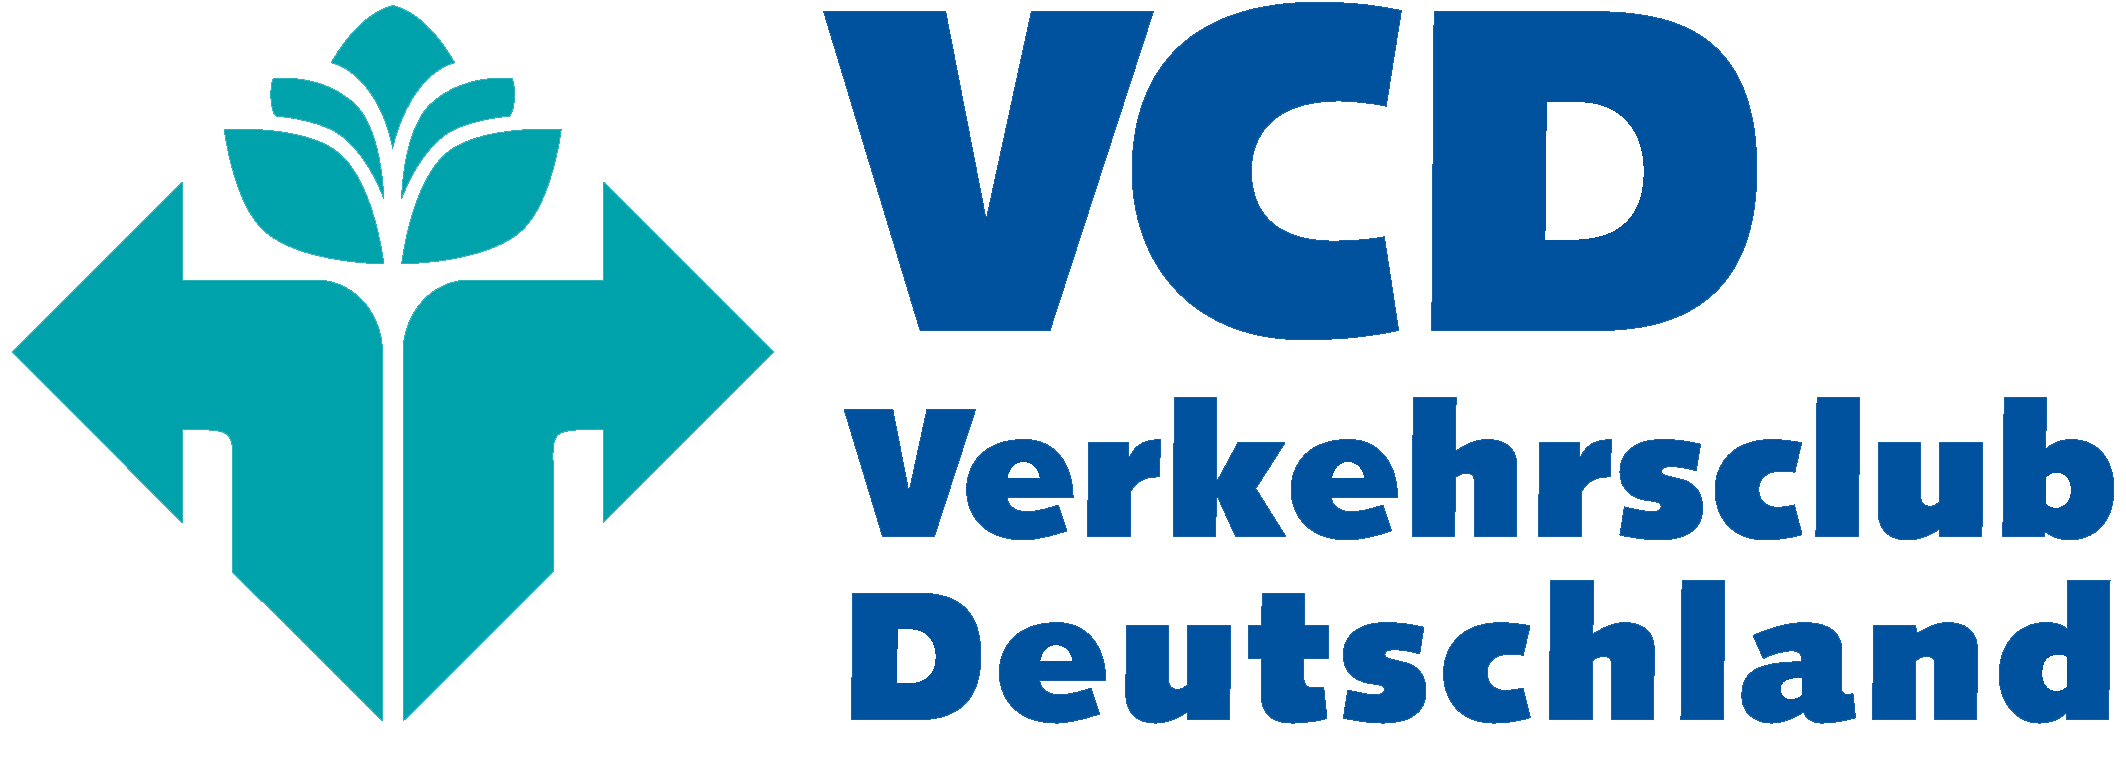 VCD_Logo_99_2c